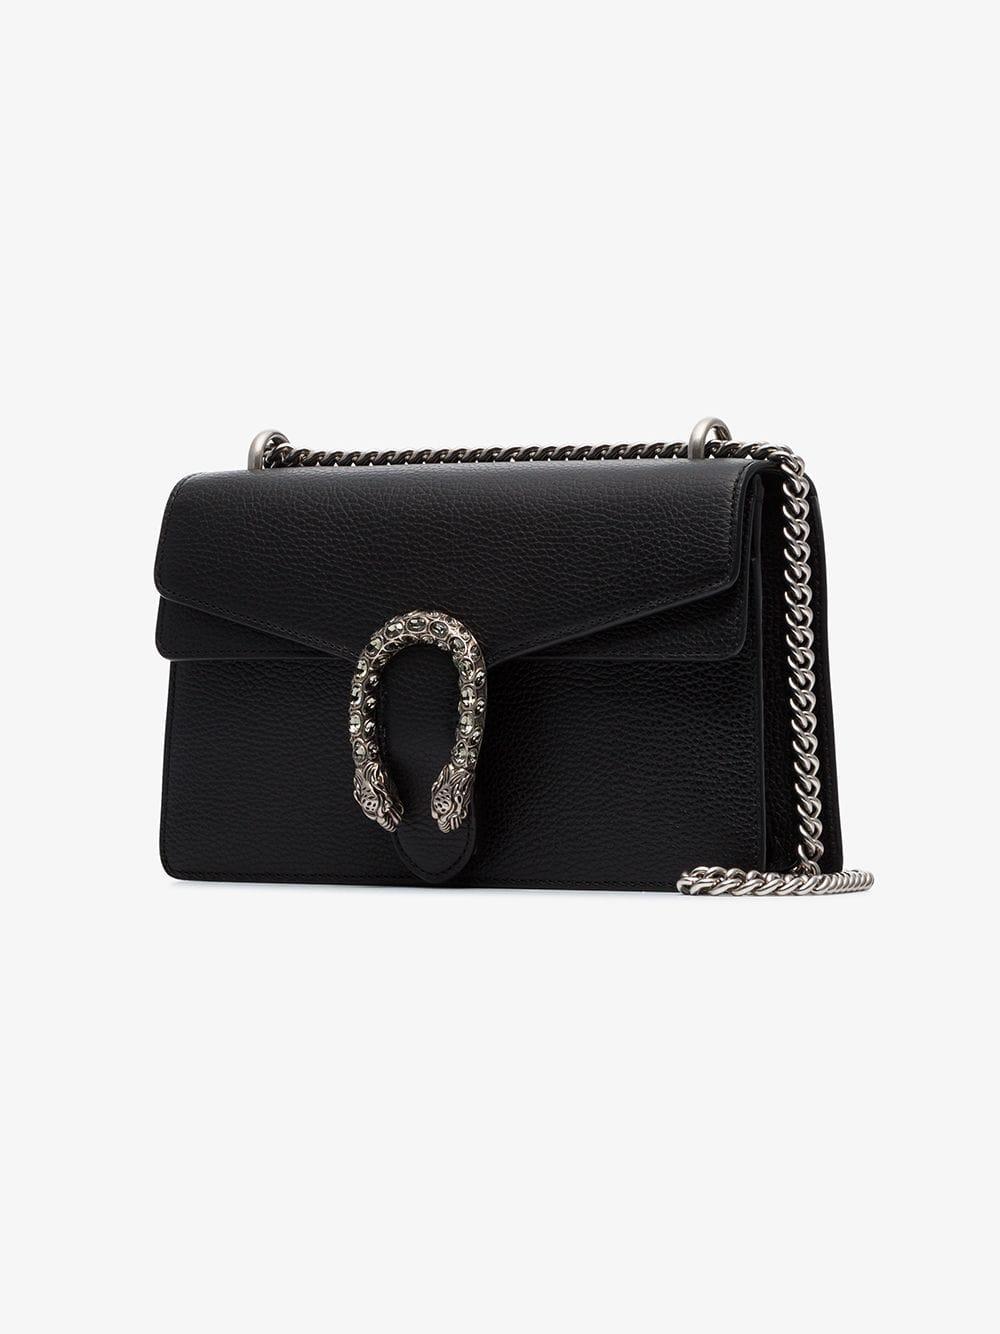 Gucci Black Dionysus Small Leather Shoulder Bag in Black - Lyst